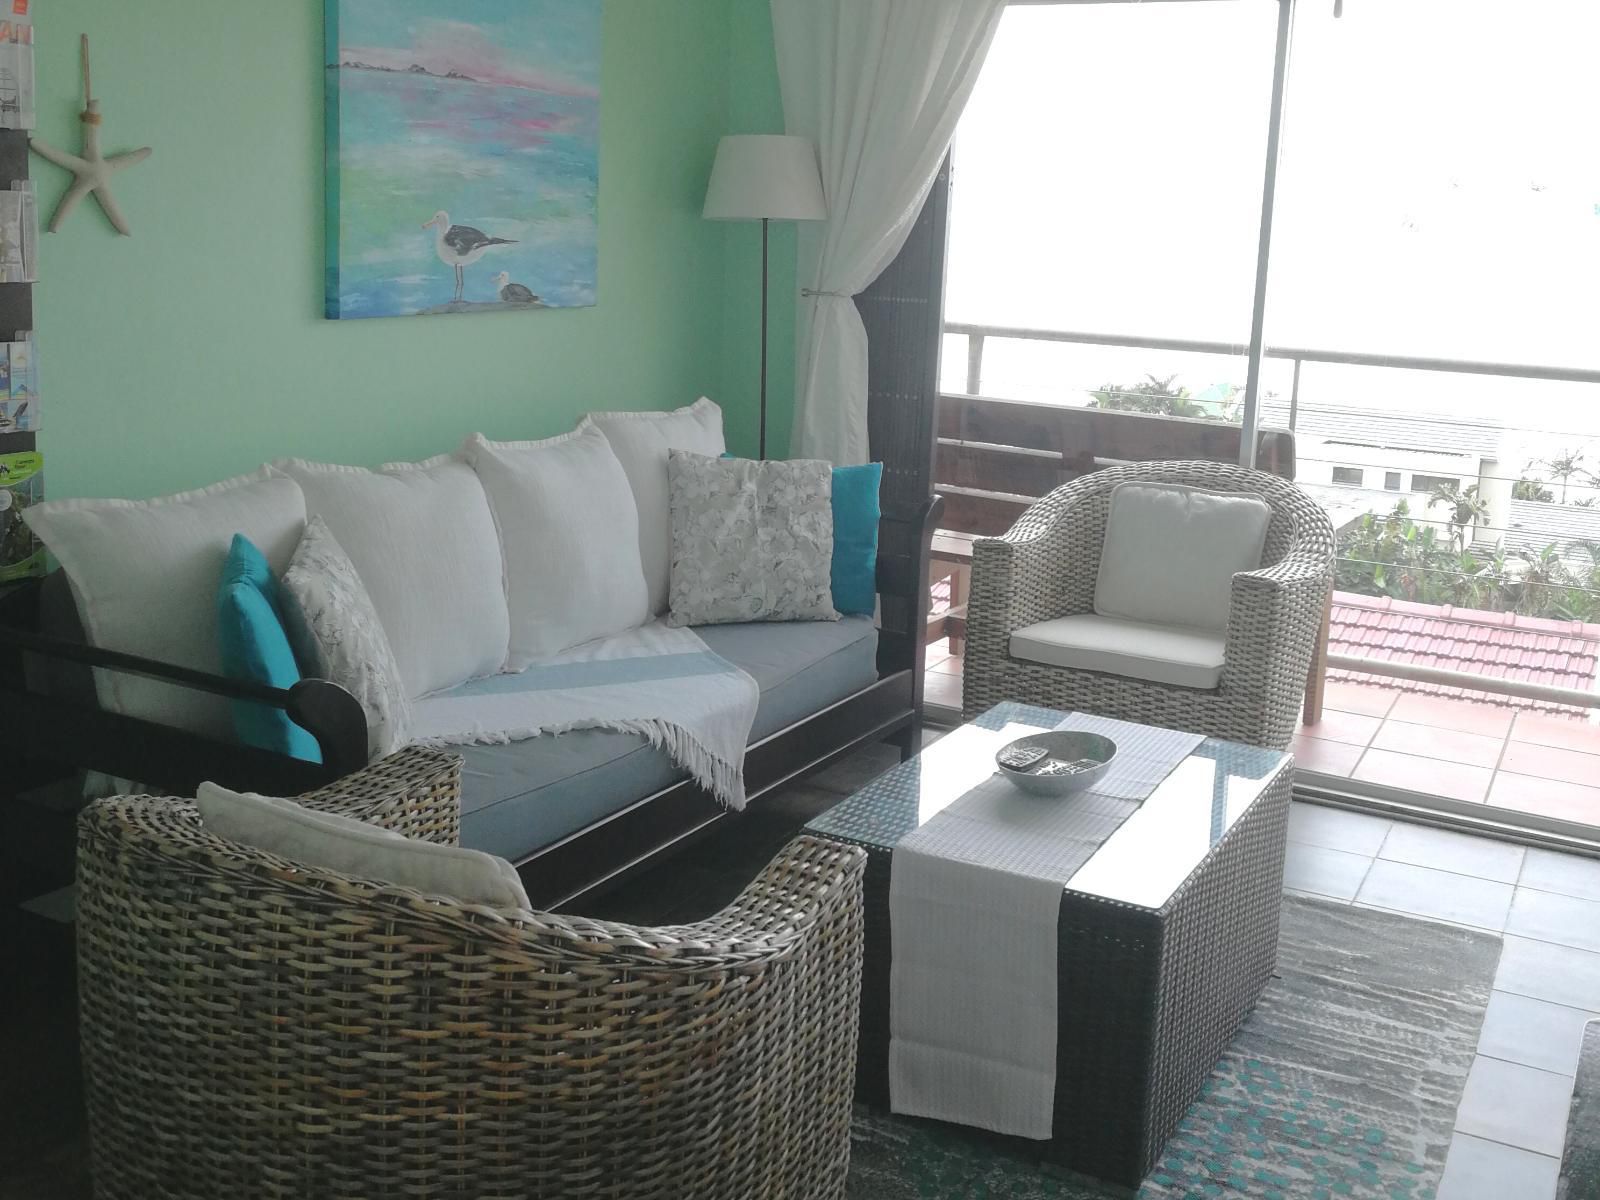 Ocean Blue Guesthouse Brighton Beach Durban Kwazulu Natal South Africa Unsaturated, Bedroom